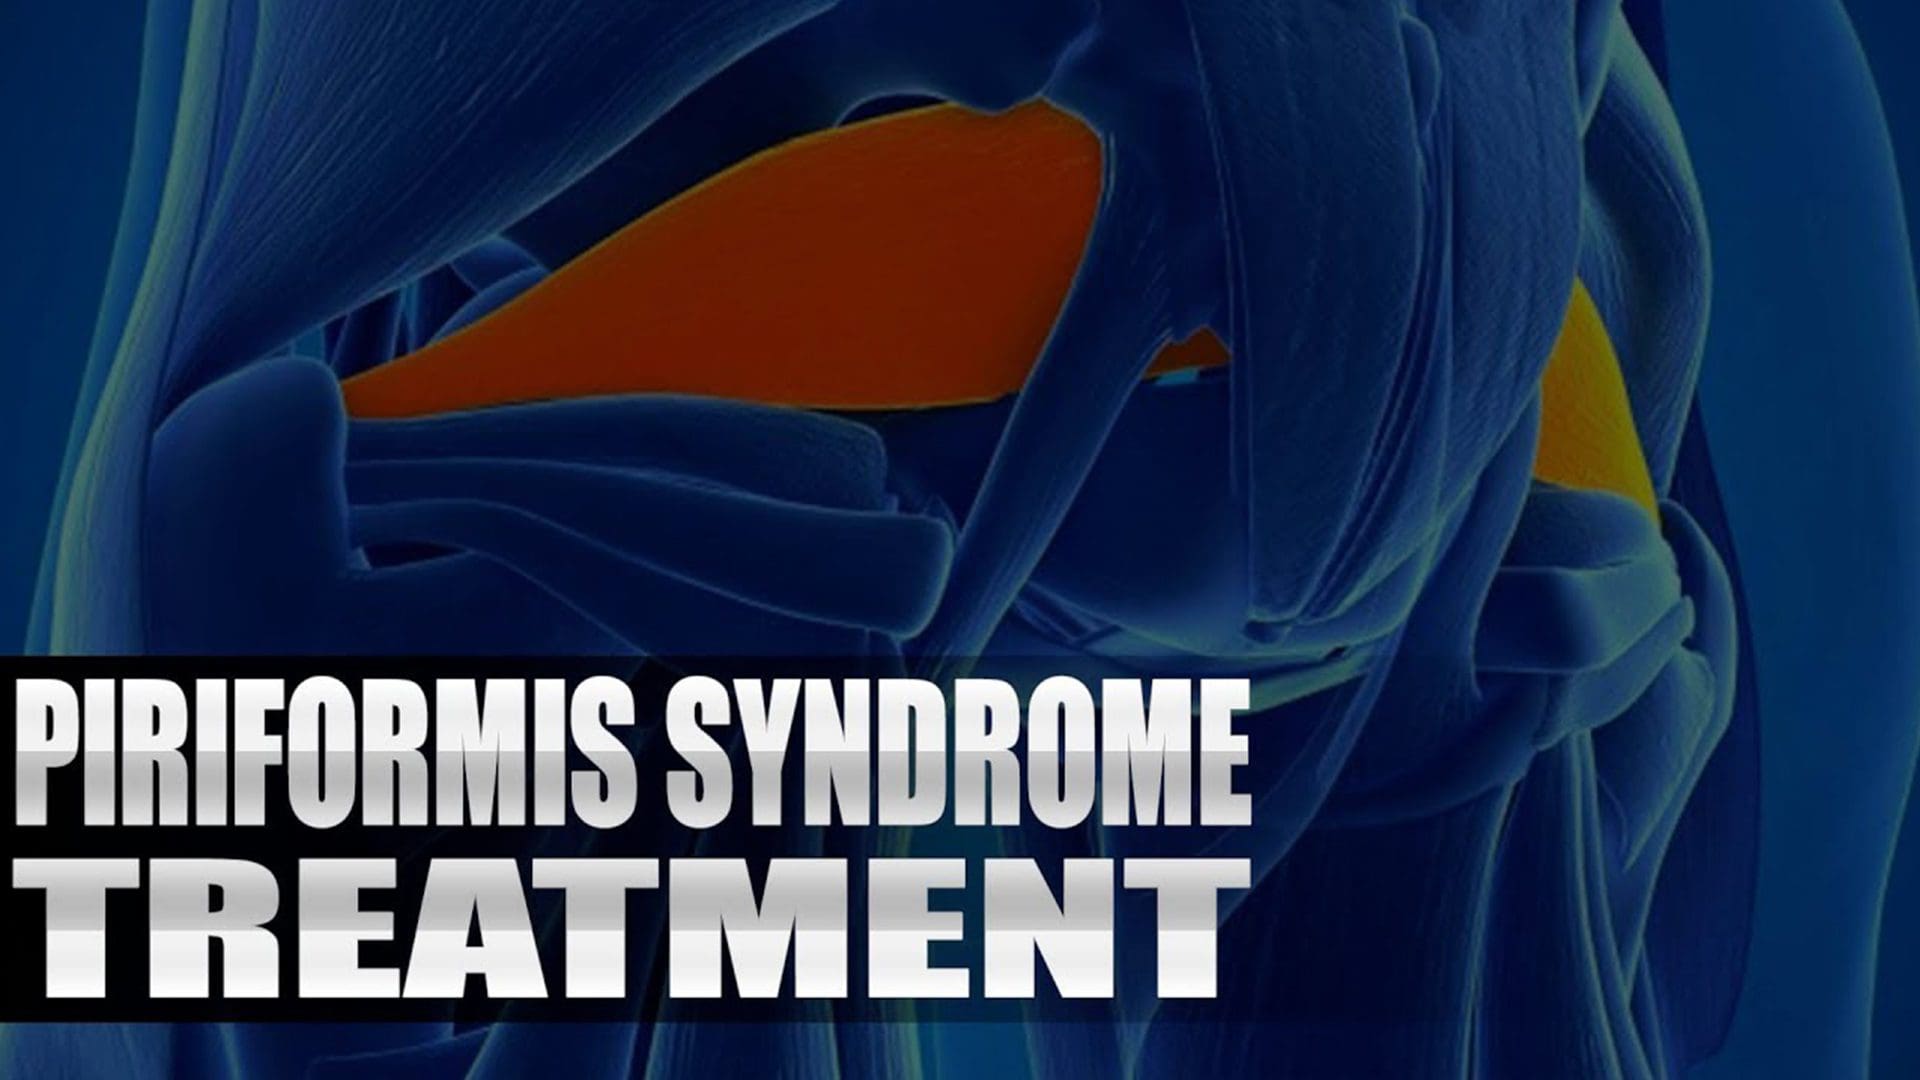 piriformis syndrome treatment el paso tx.